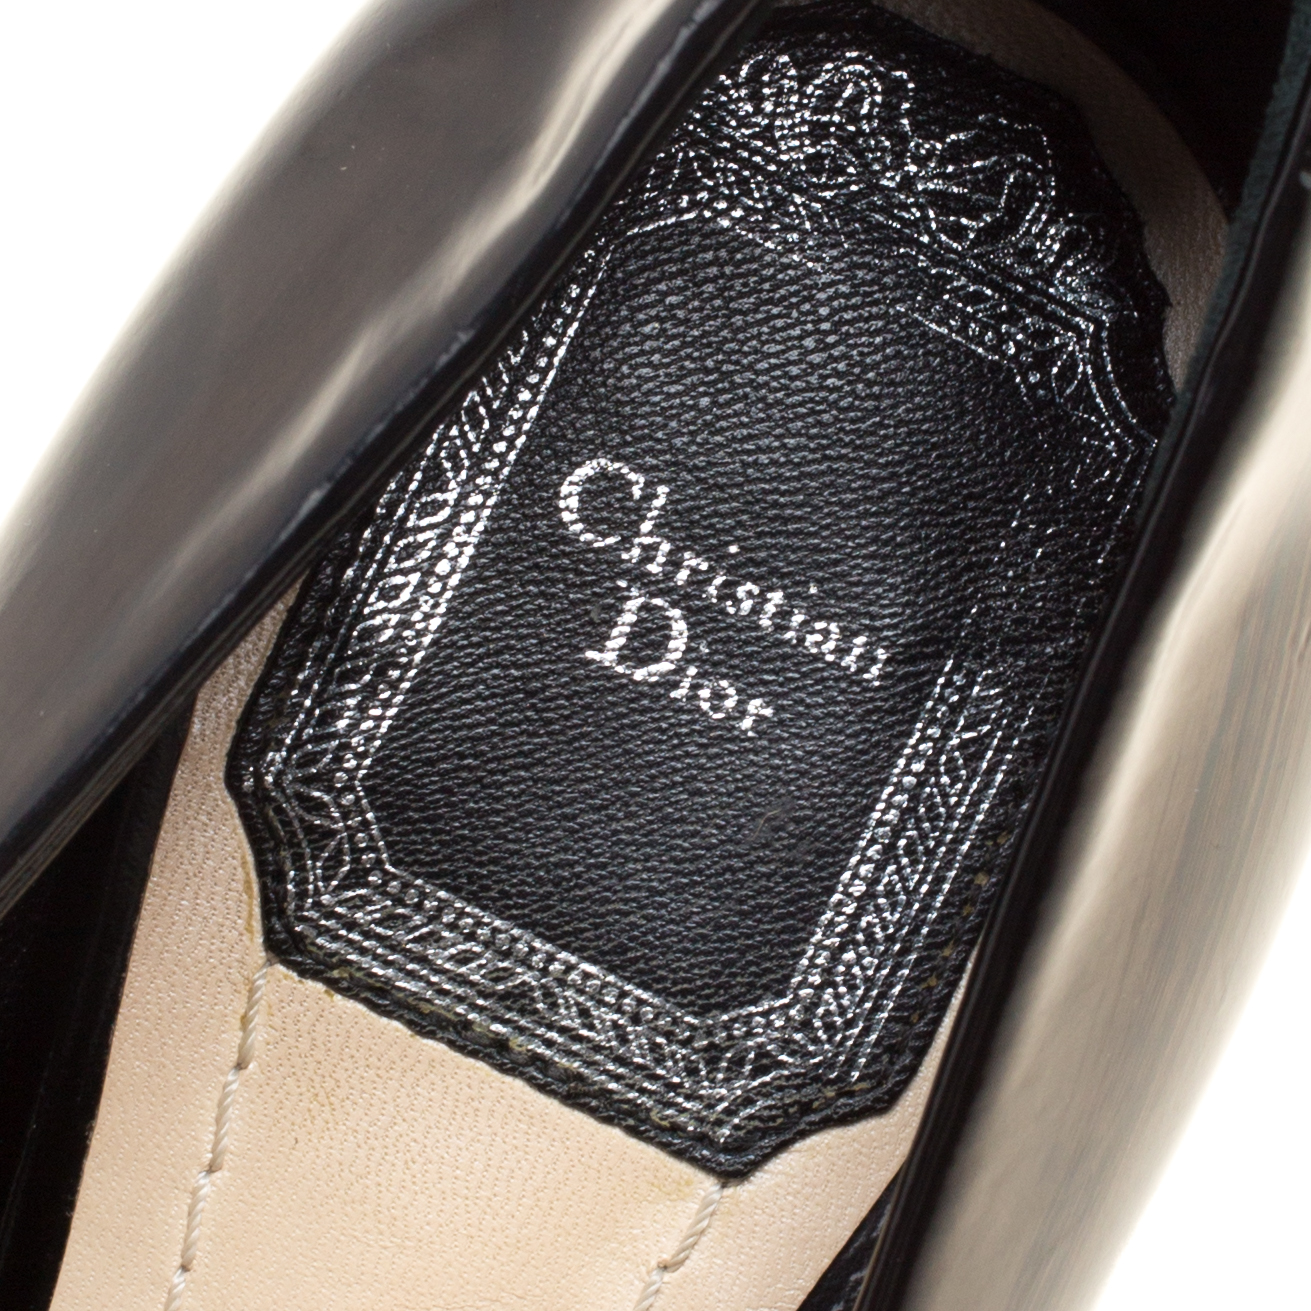 Dior Black Leather Peep Toe Platform Pumps Size 36